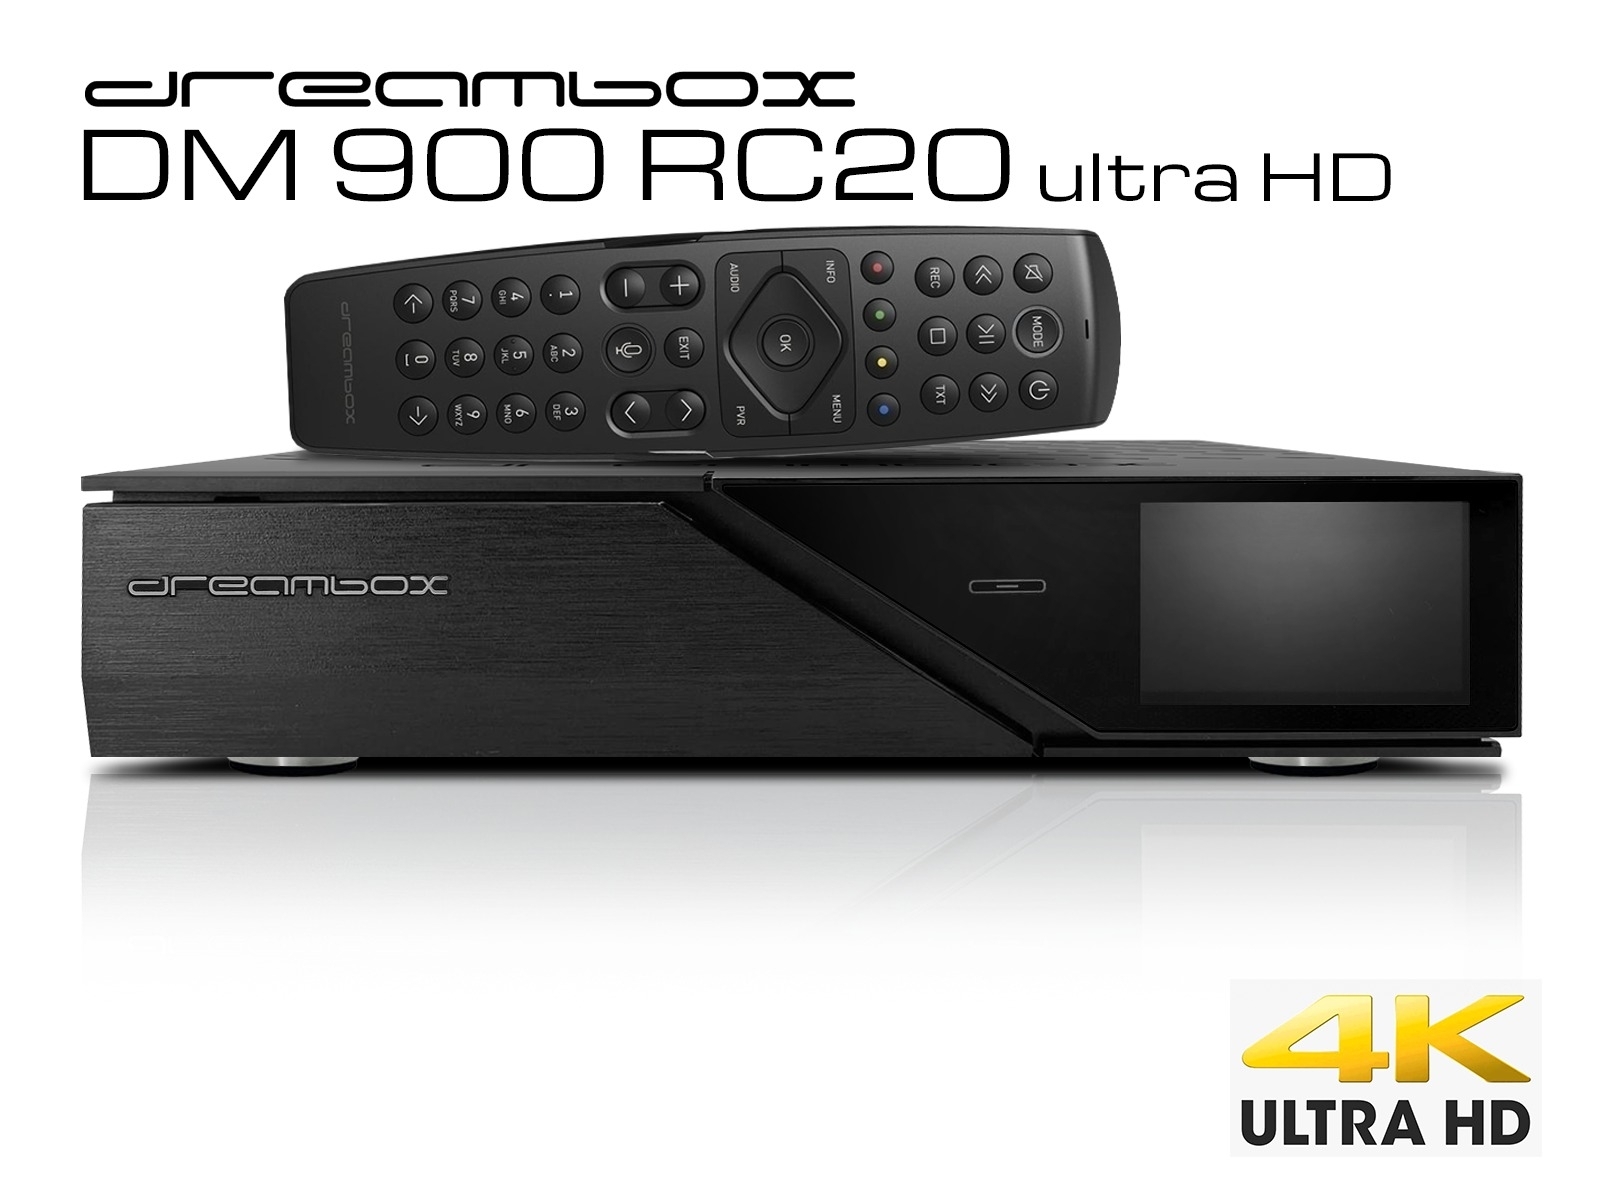 Dreambox DM900 UHD 4K 2x DVB-S2X / 1x DVB-C/T2 Triple MS Tuner E2 Linux PVR Receiver